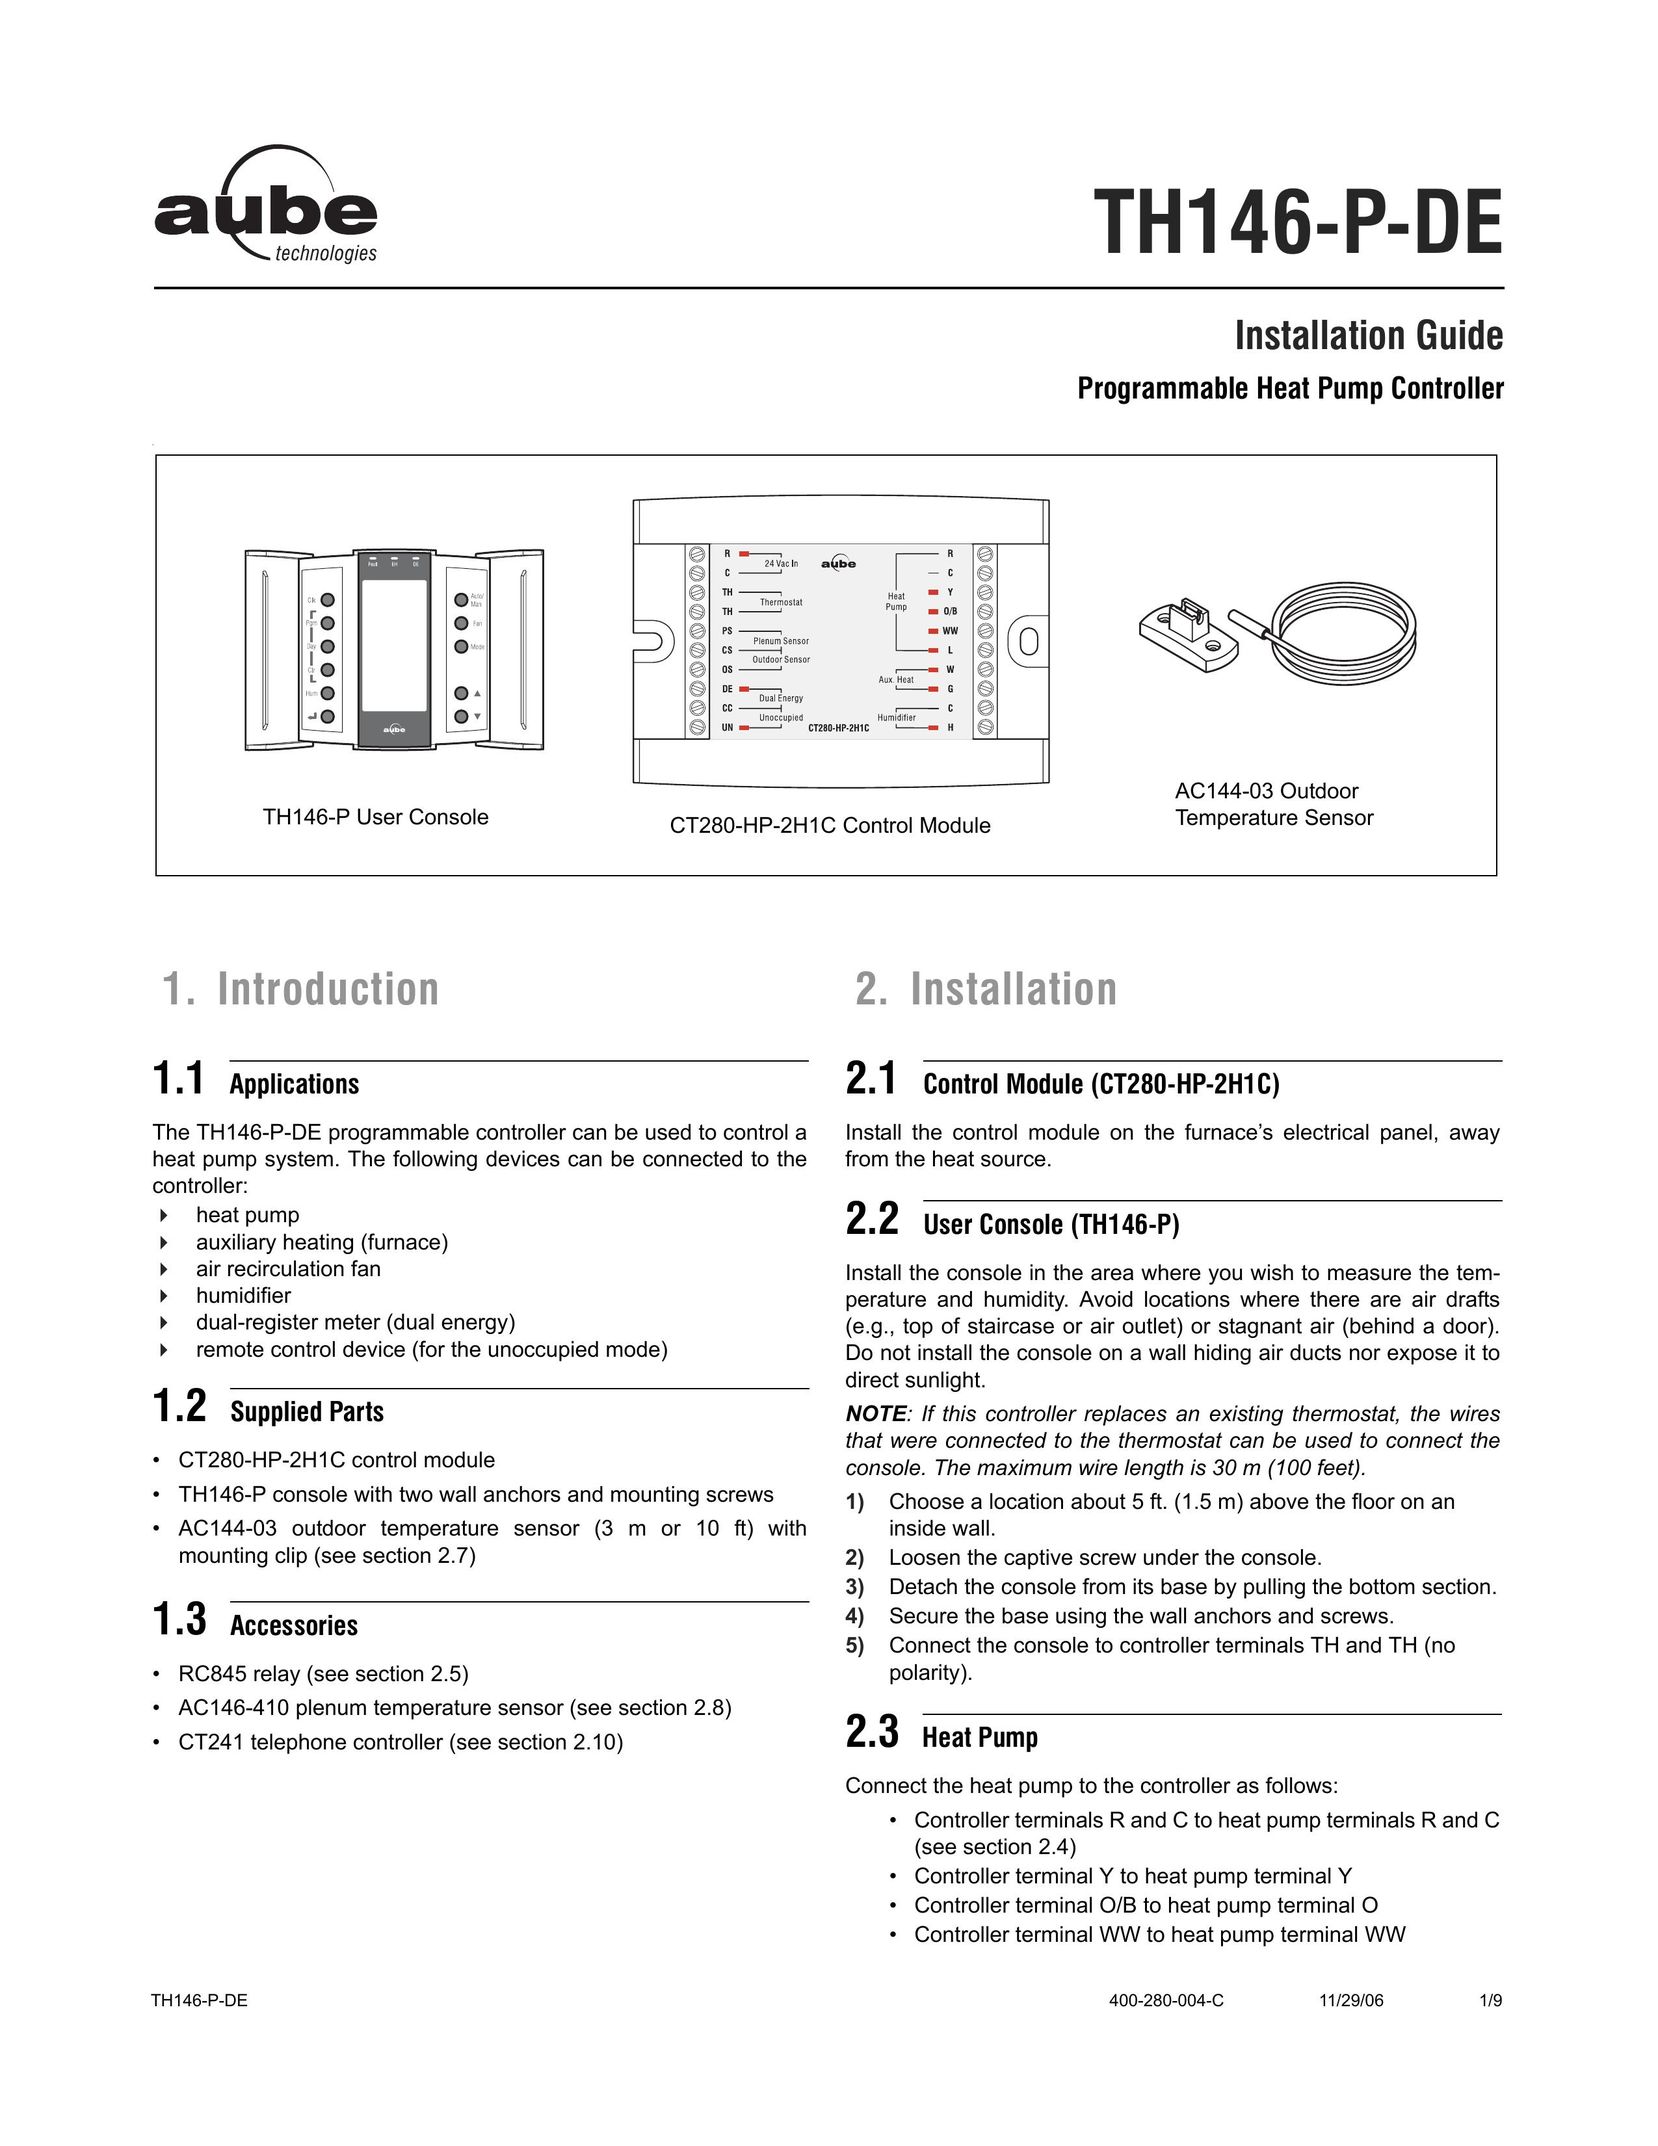 Aube Technologies TH146-P-DE Heat Pump User Manual